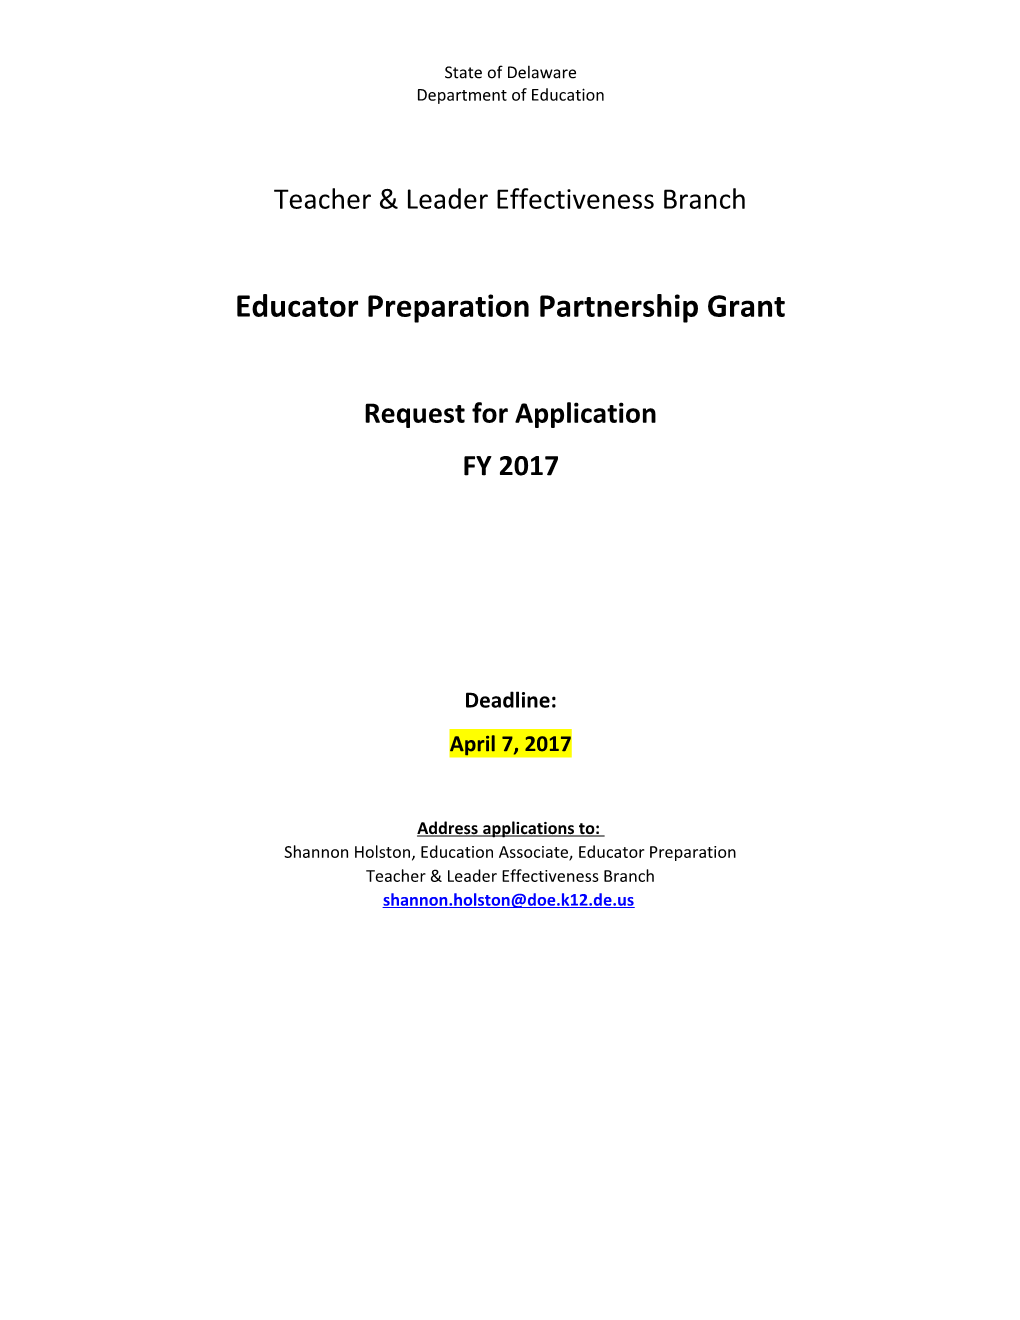 Educator Preparation Partnership